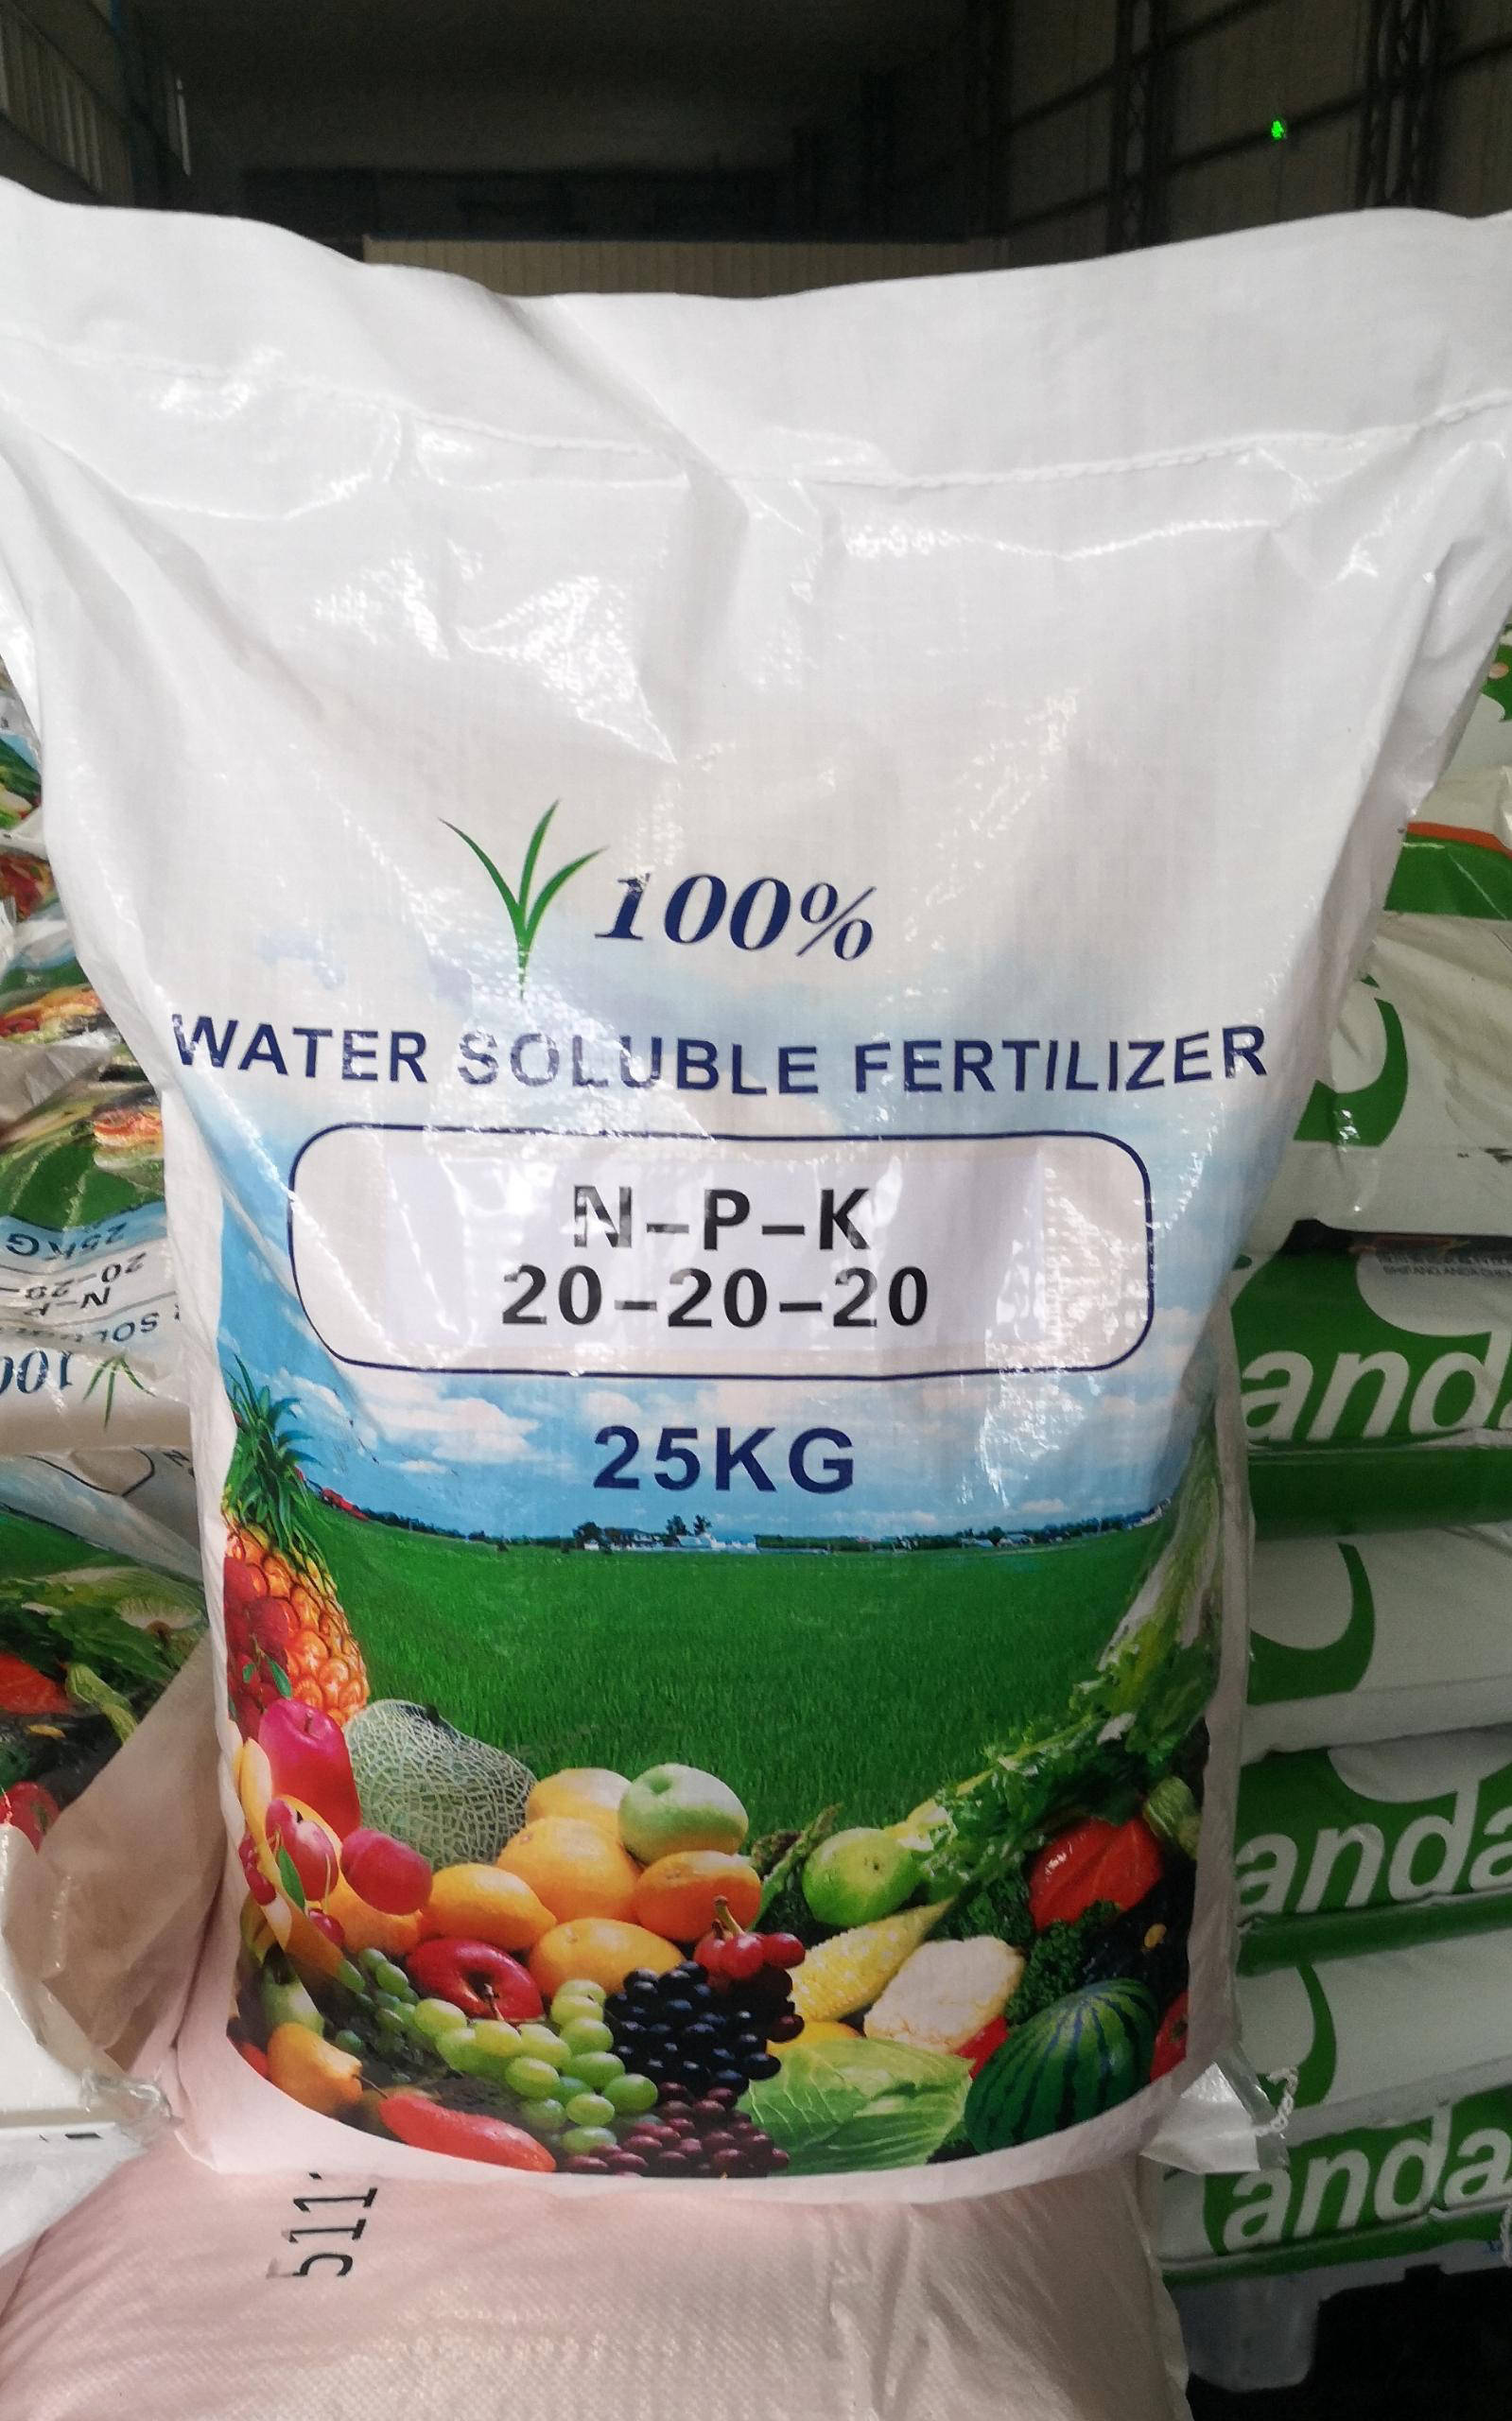 Nitrogen-phosphorus and complex fertilizers NPK from China